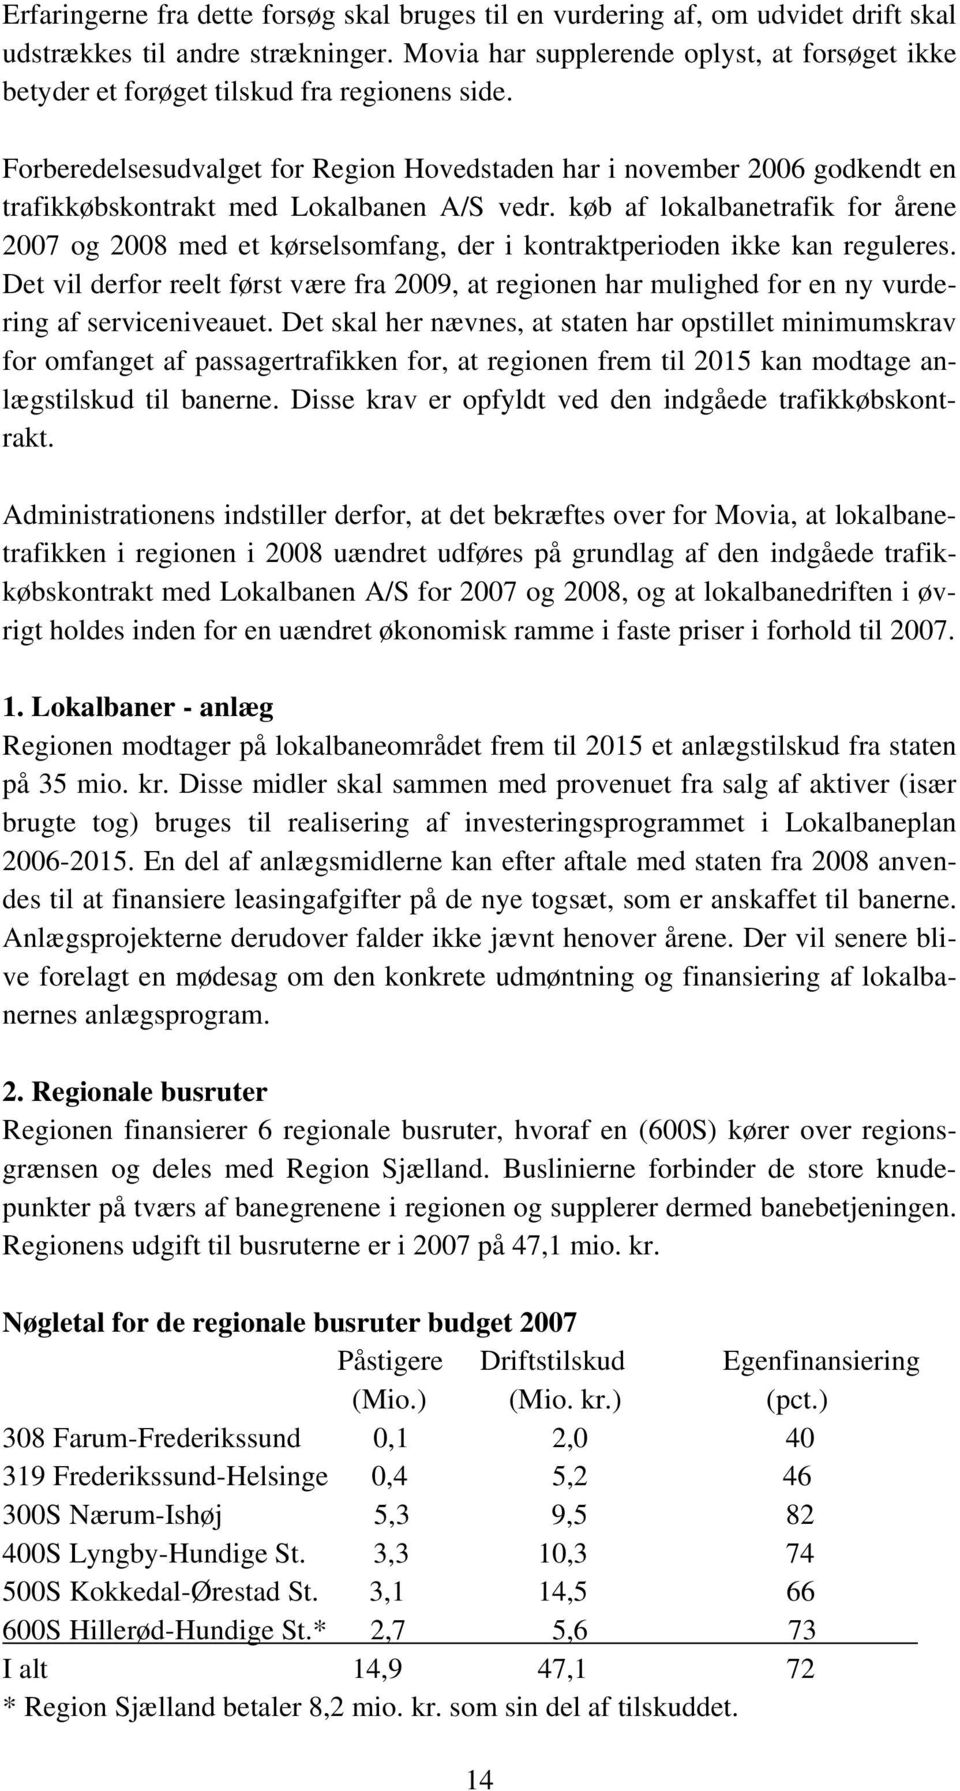 Forberedelsesudvalget for Region Hovedstaden har i november 2006 godkendt en trafikkøbskontrakt med Lokalbanen A/S vedr.